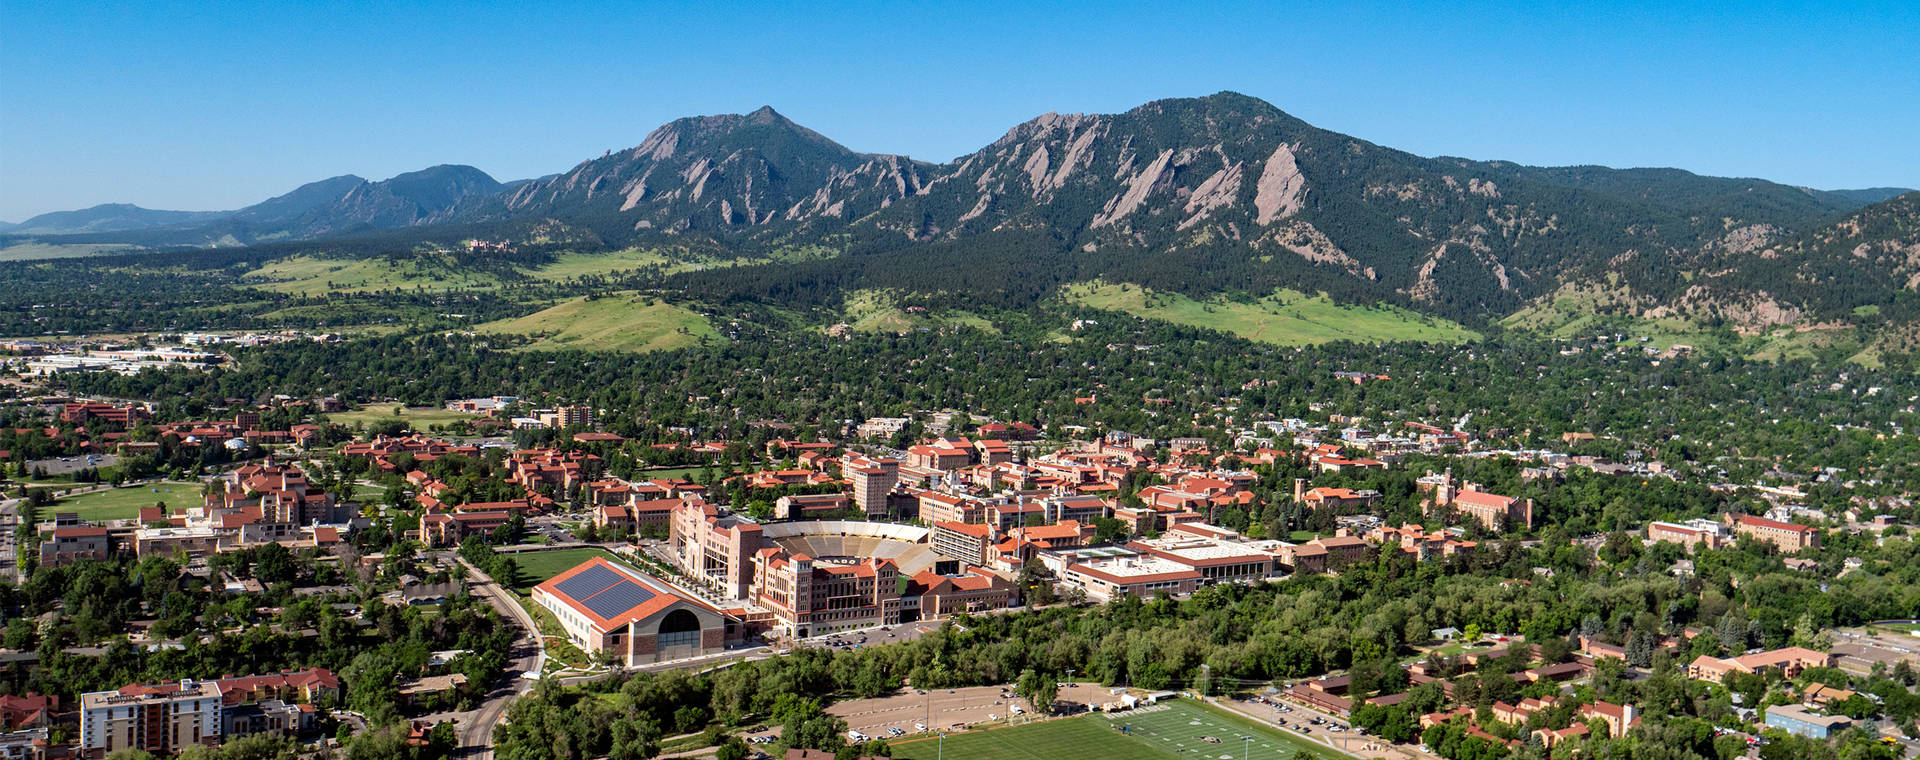 University Of Colorado Aerial View Wallpaper